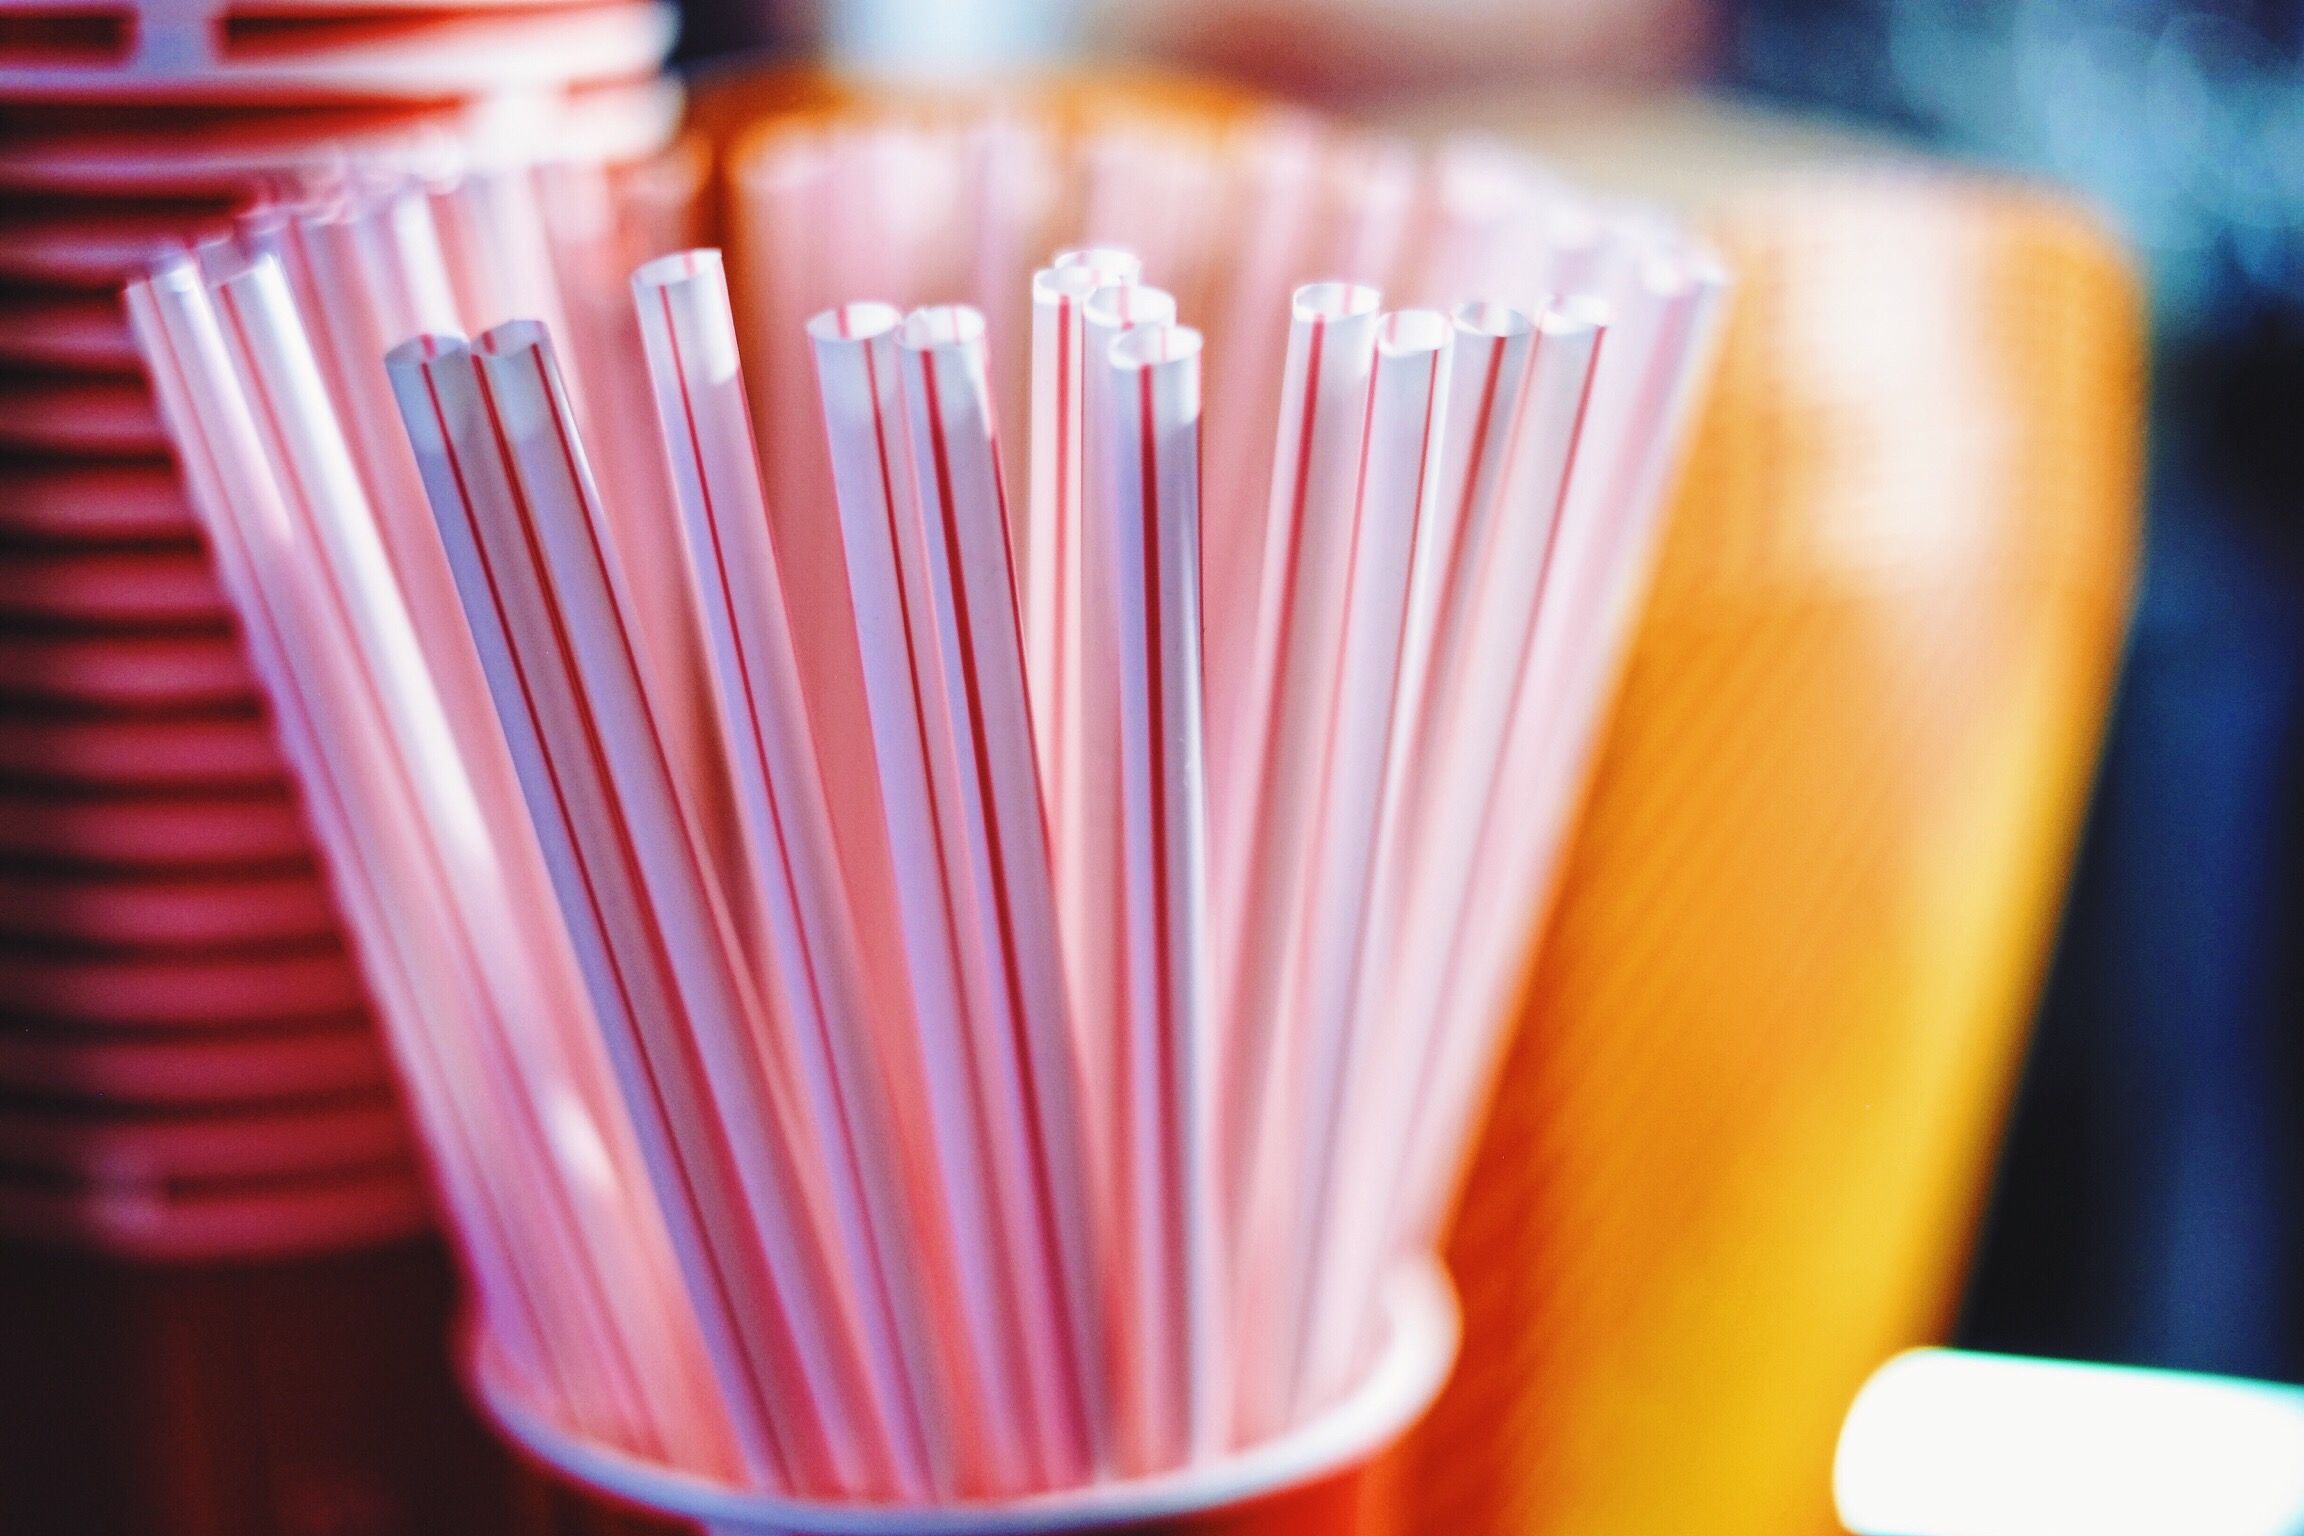 Washington utensil and straw law takes effect Jan. 1